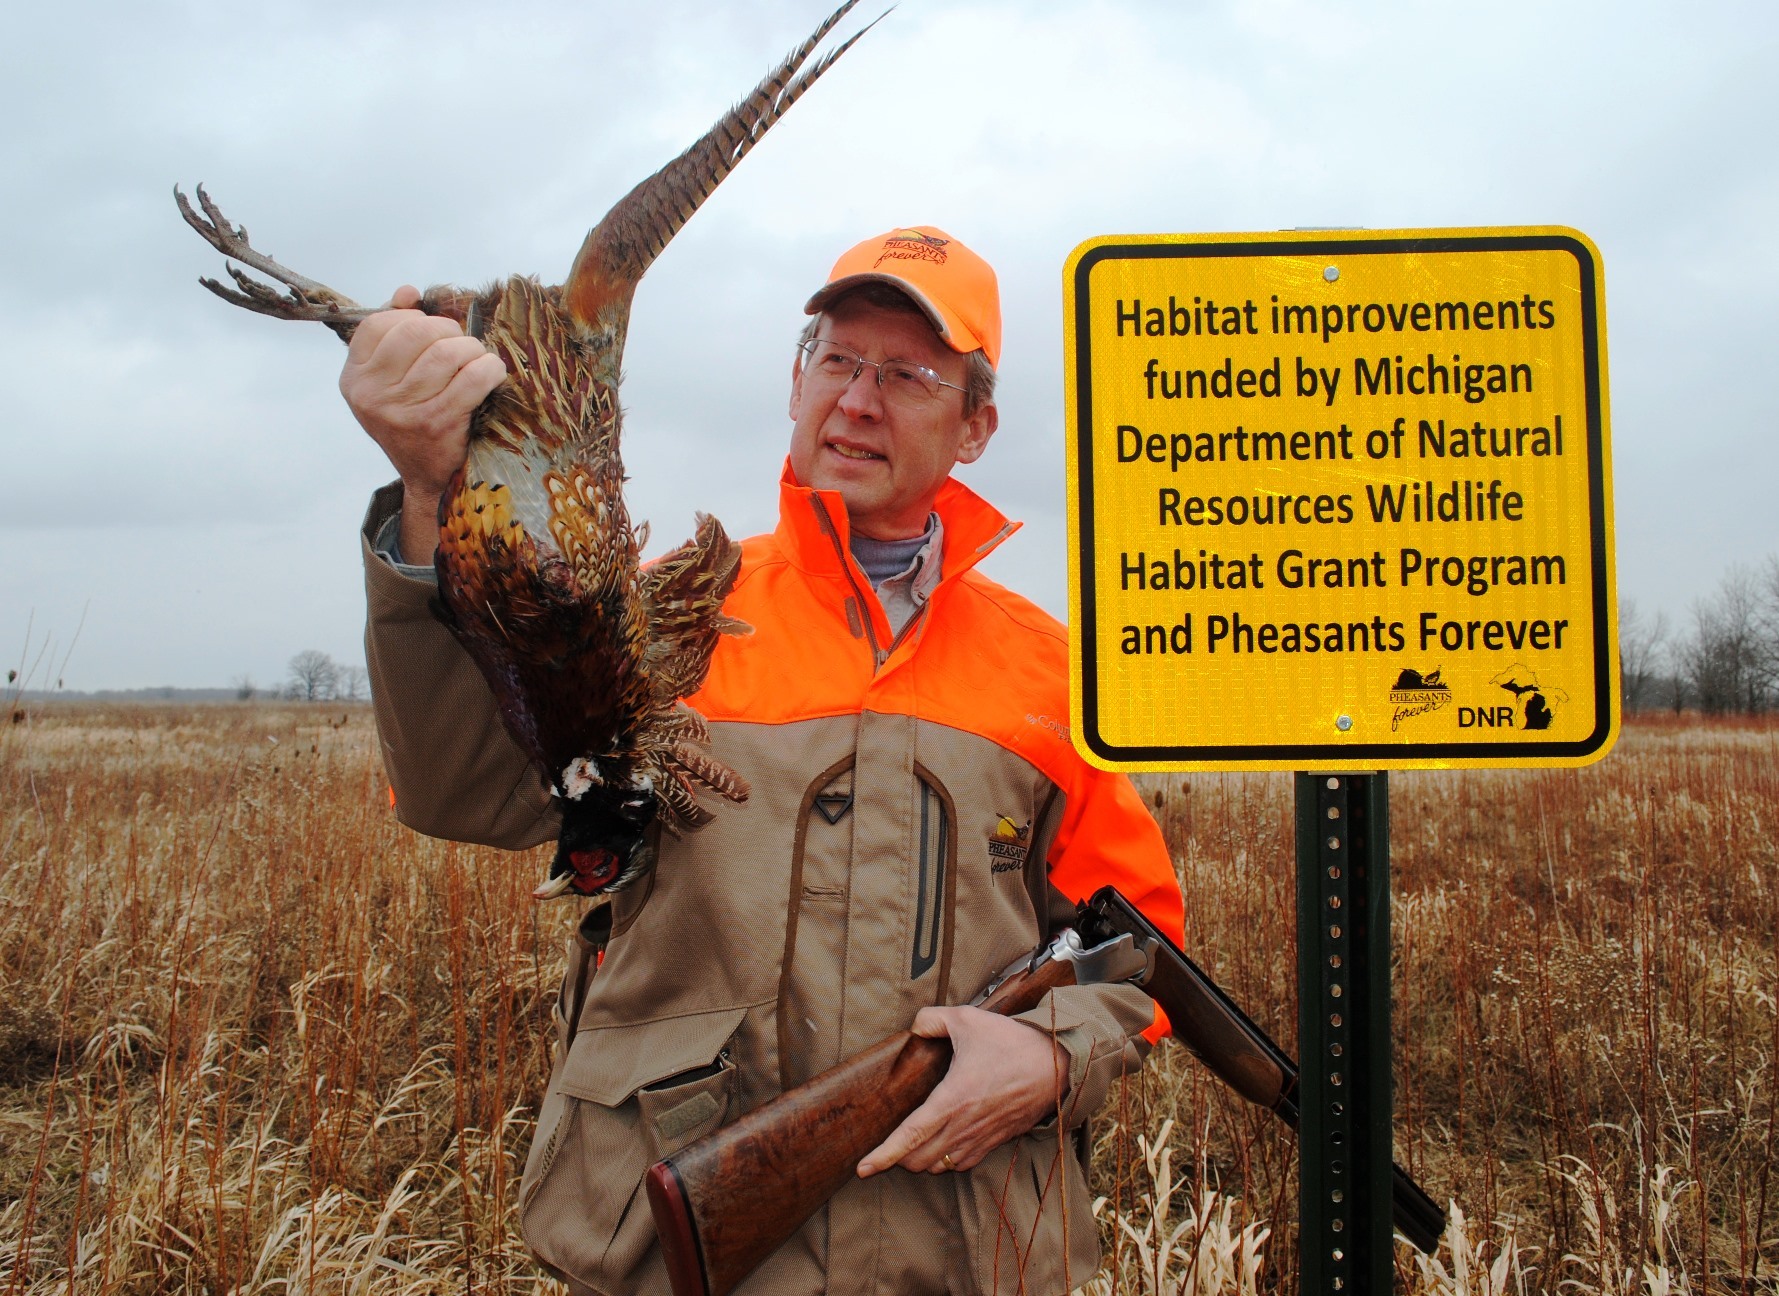 Bill Vander Zouwen, Michigan Region representative for Pheasants Forever, looks at a male pheasant he shot in a pheasant habitat improvement area.